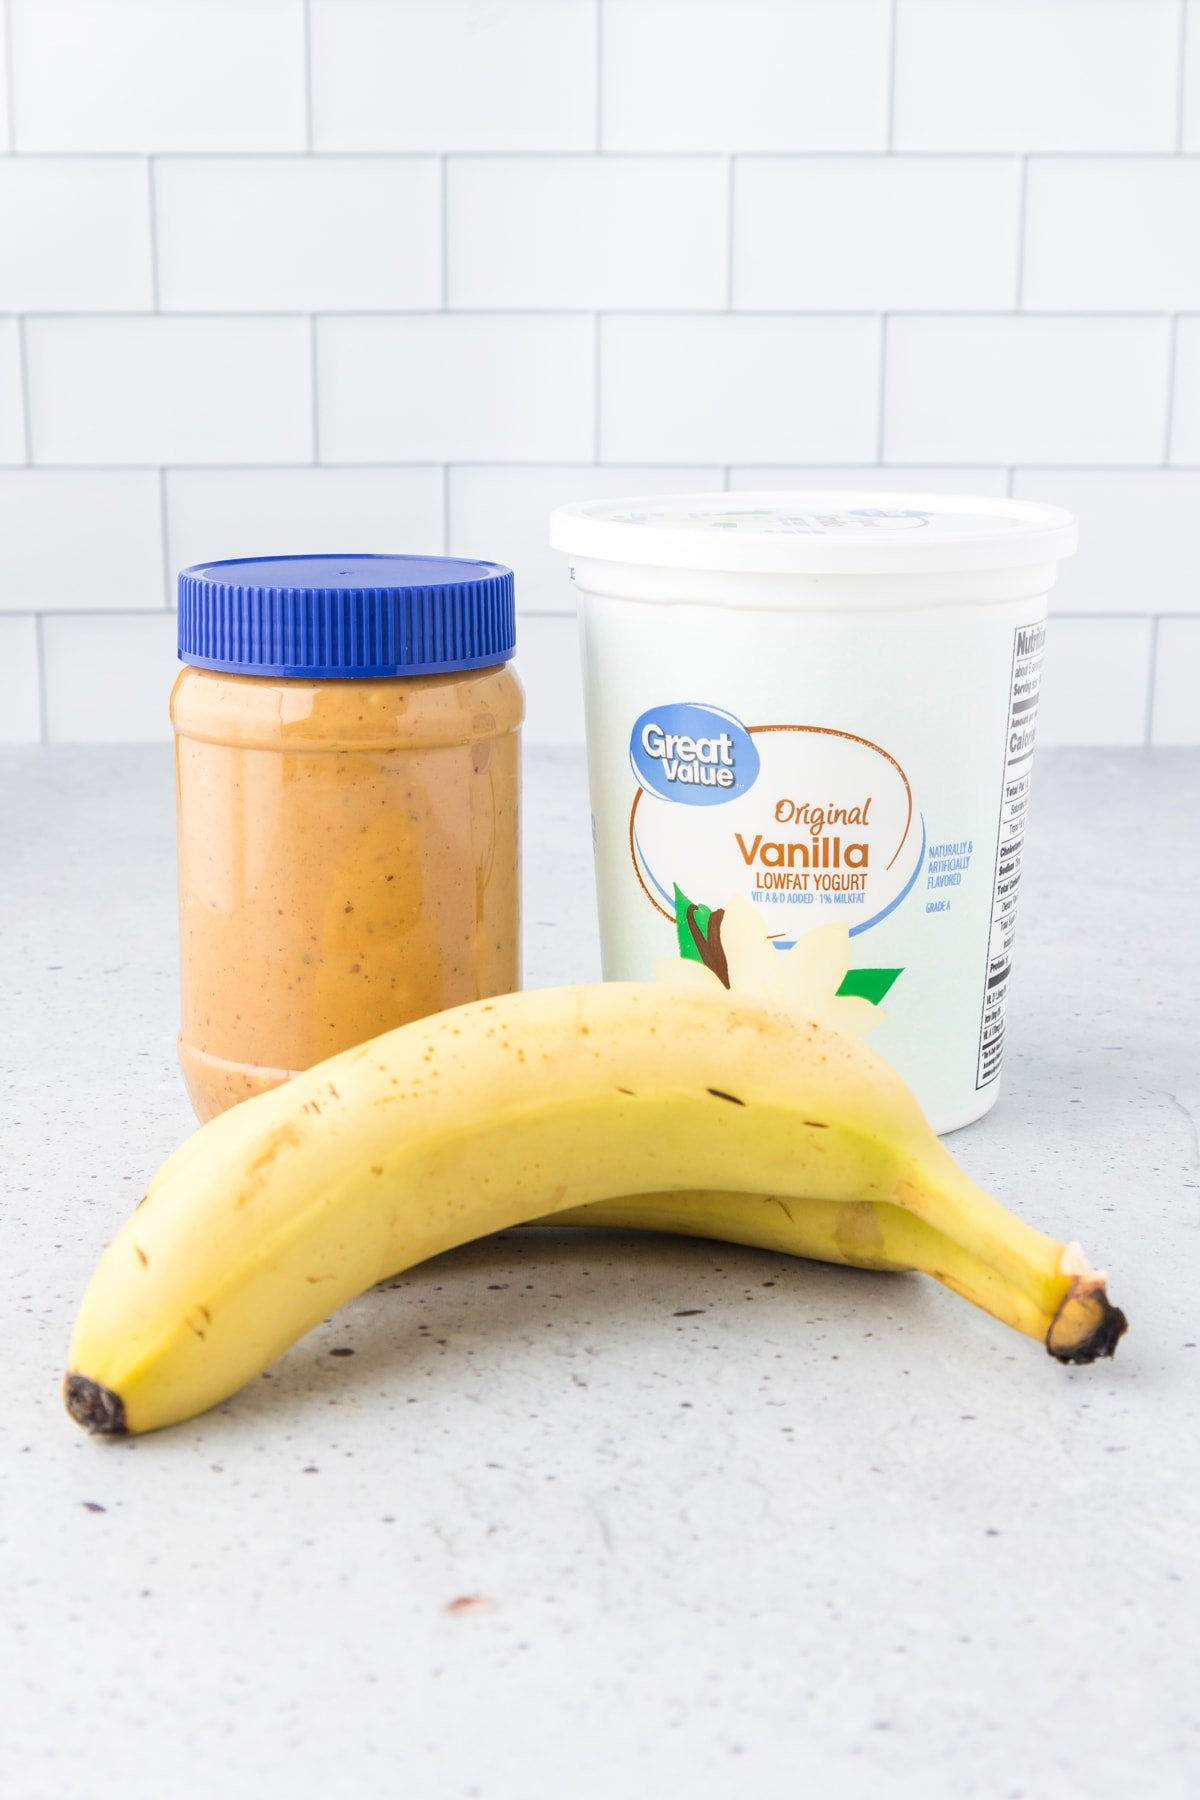 Banana, Peanut Butter and Yogurt ingredients